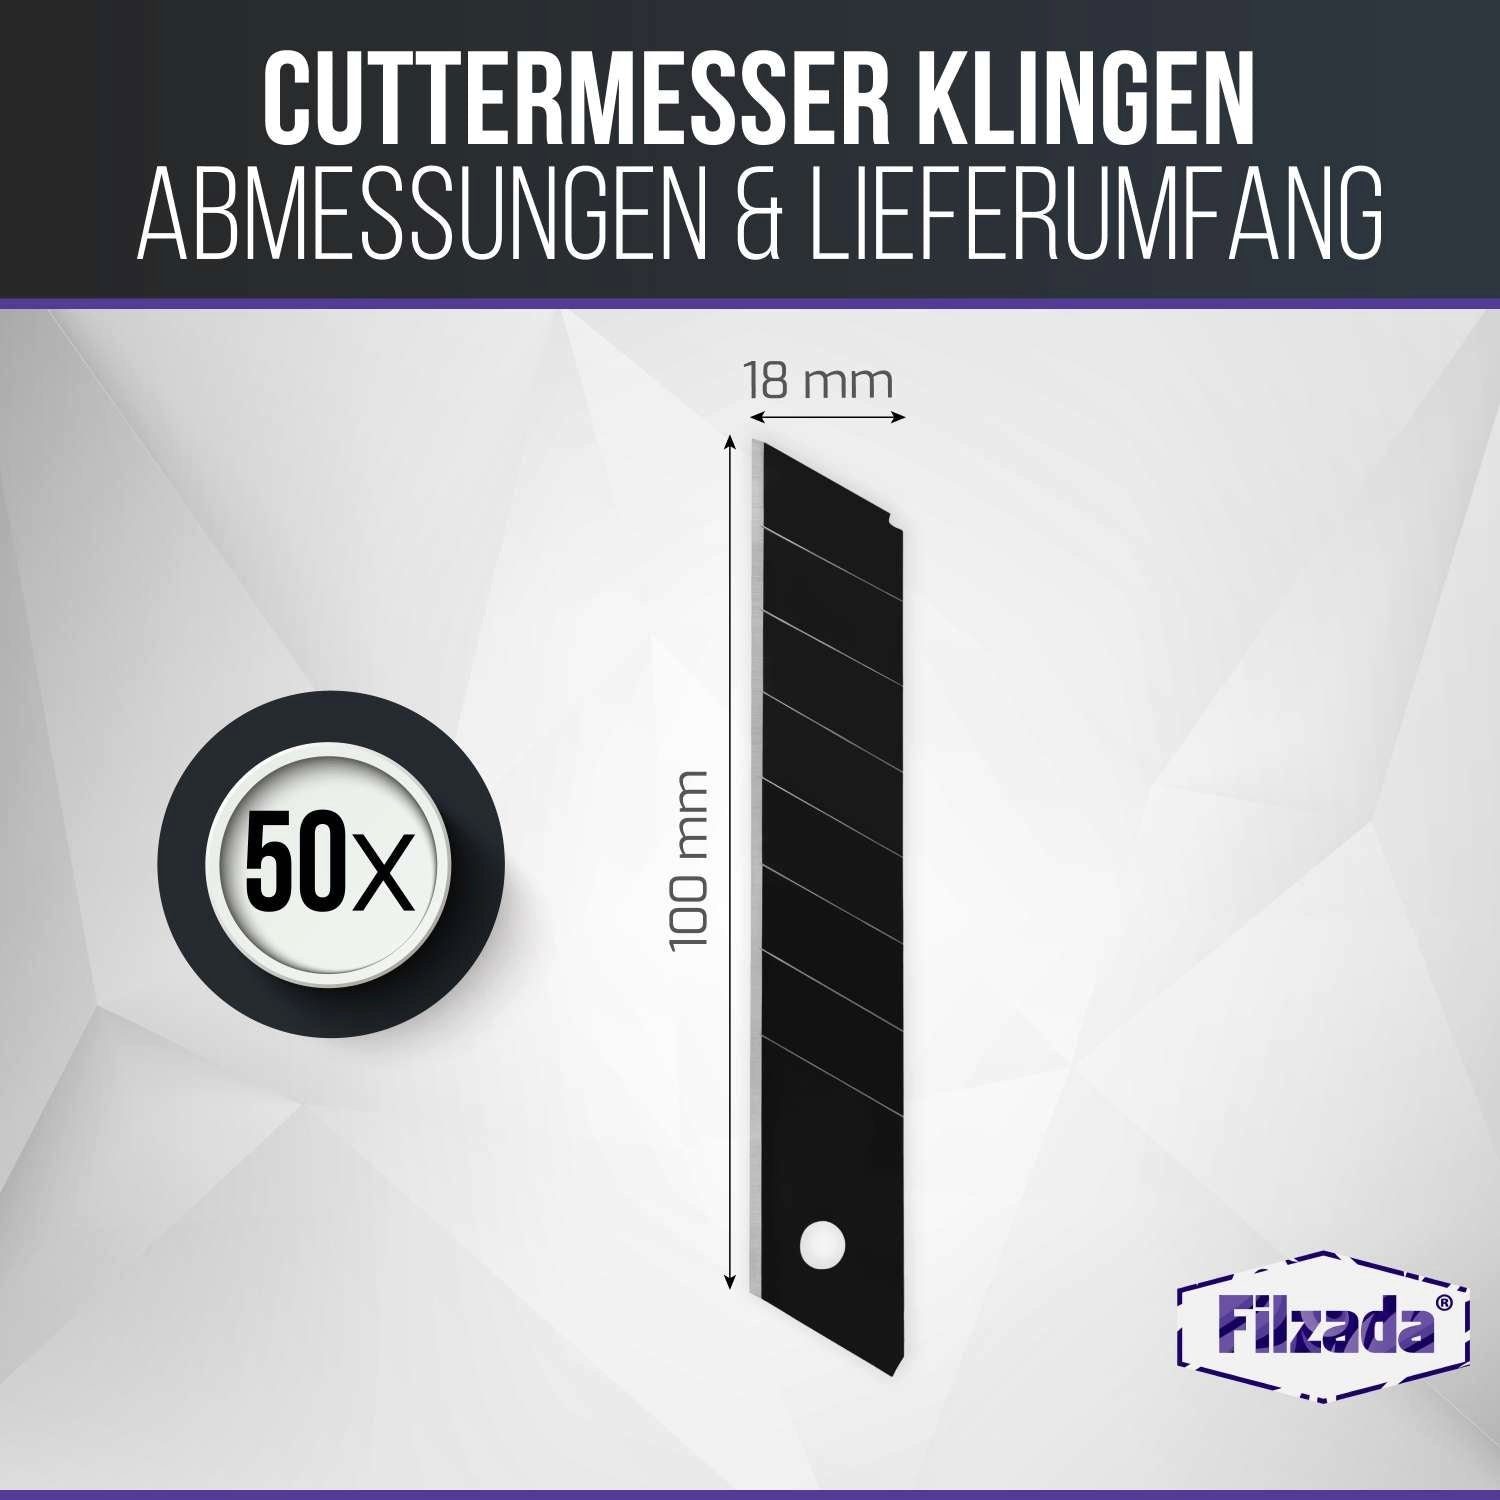 Filzada Cuttermesser 50x 18mm Carbonstahl Abbrechklingen Cutterklingen Cuttermesser Klingen